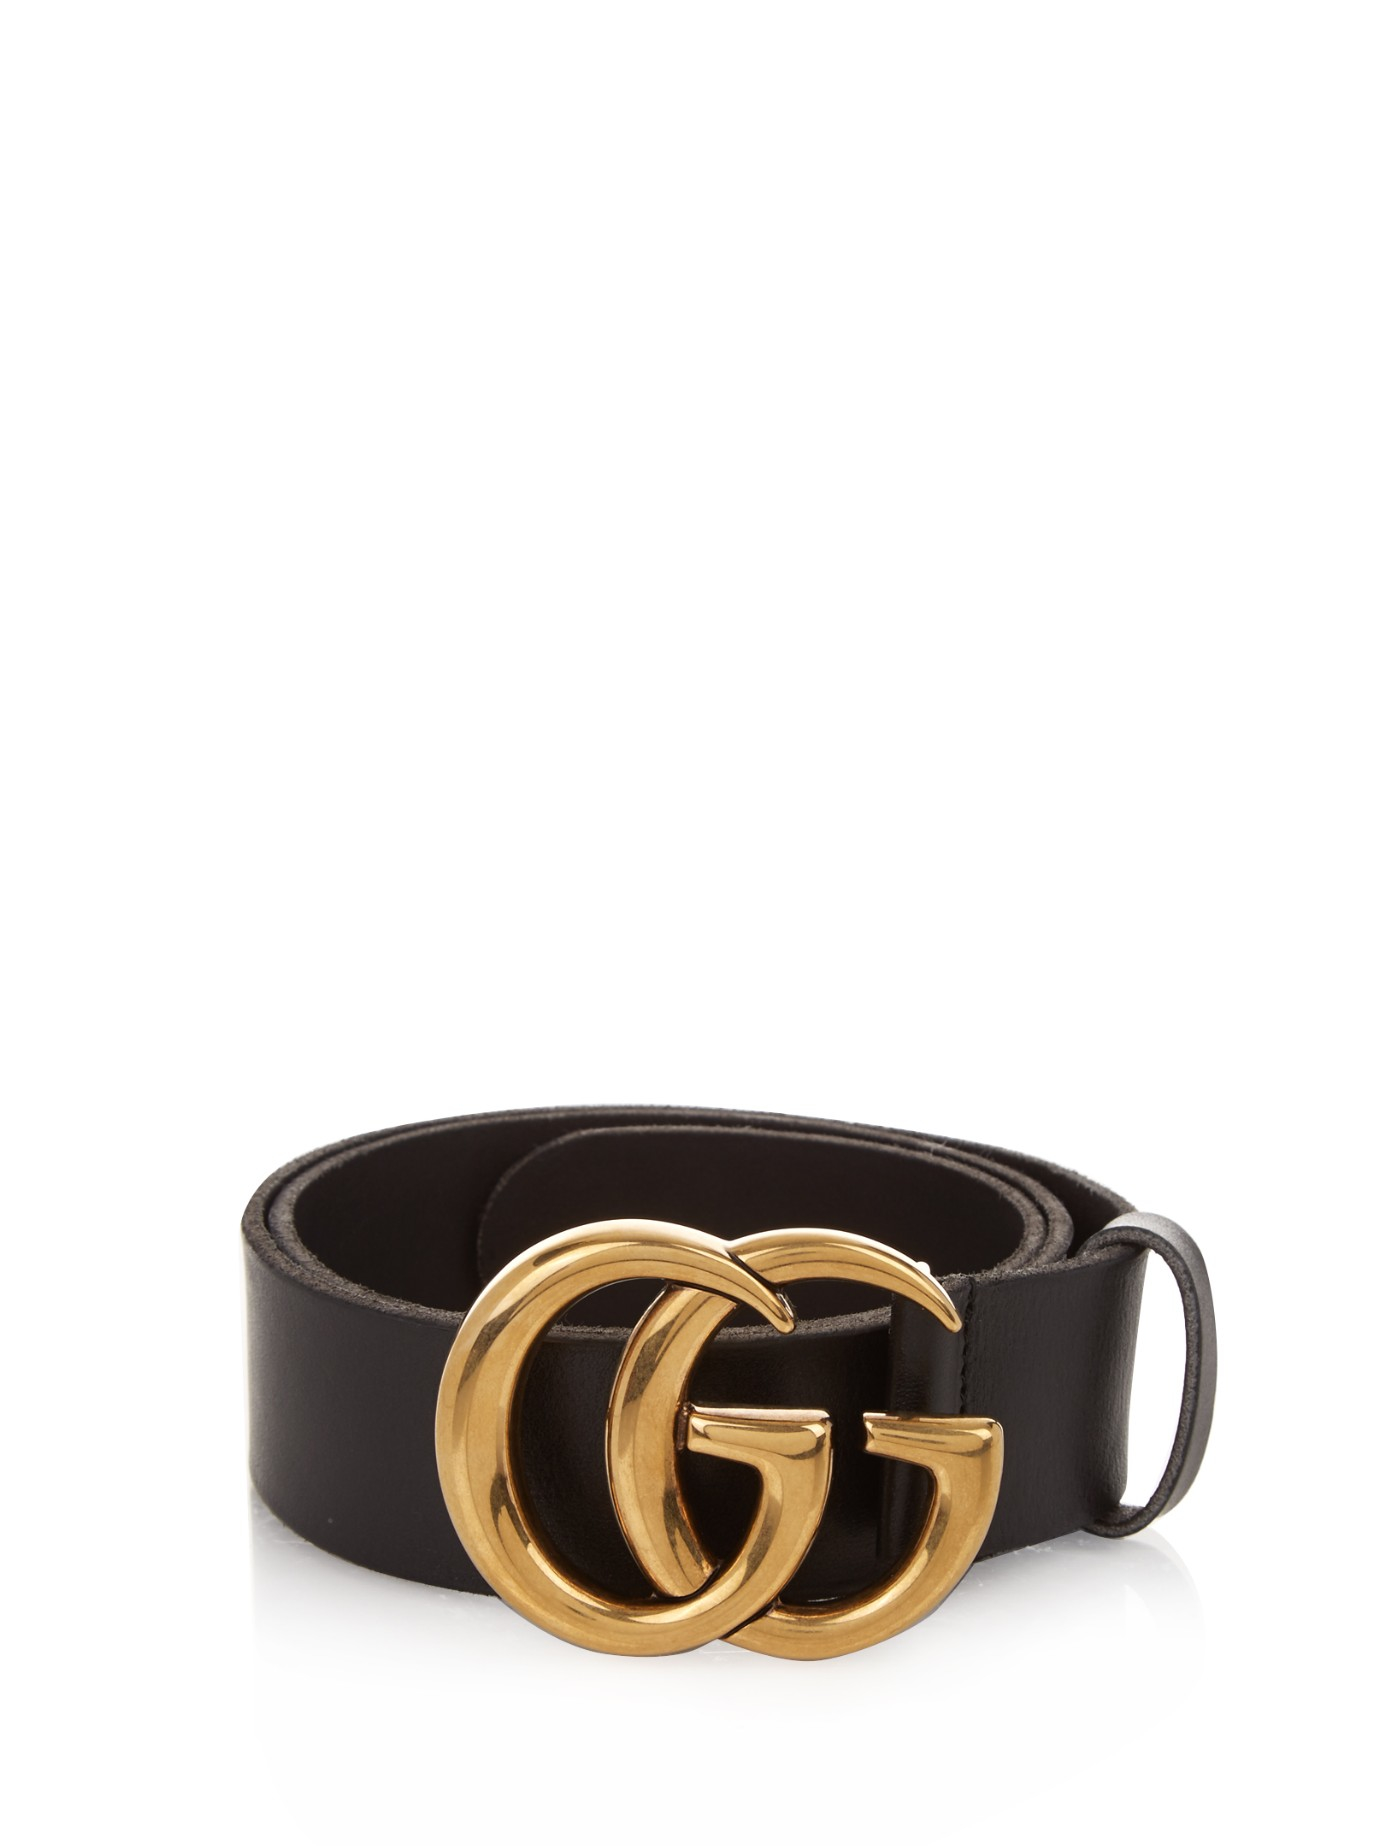 Lyst - Gucci Gg-logo Leather Belt in Black